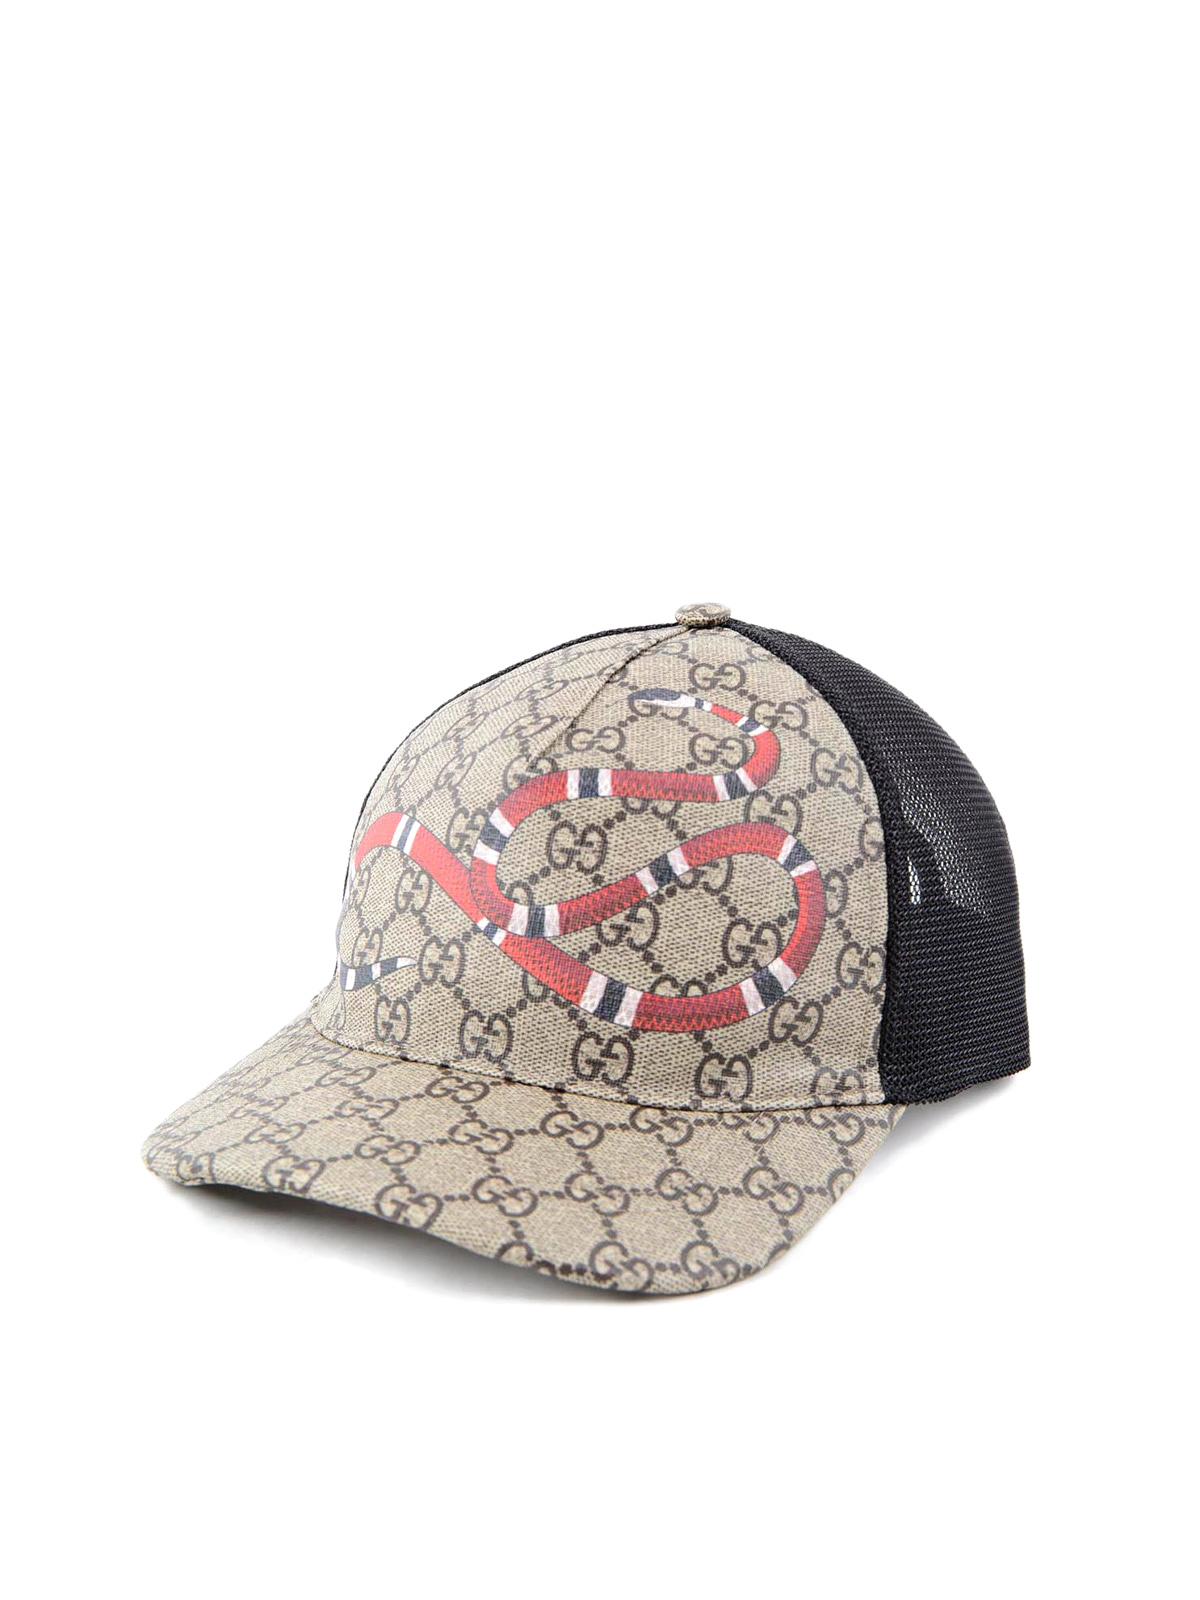 snake gucci hat